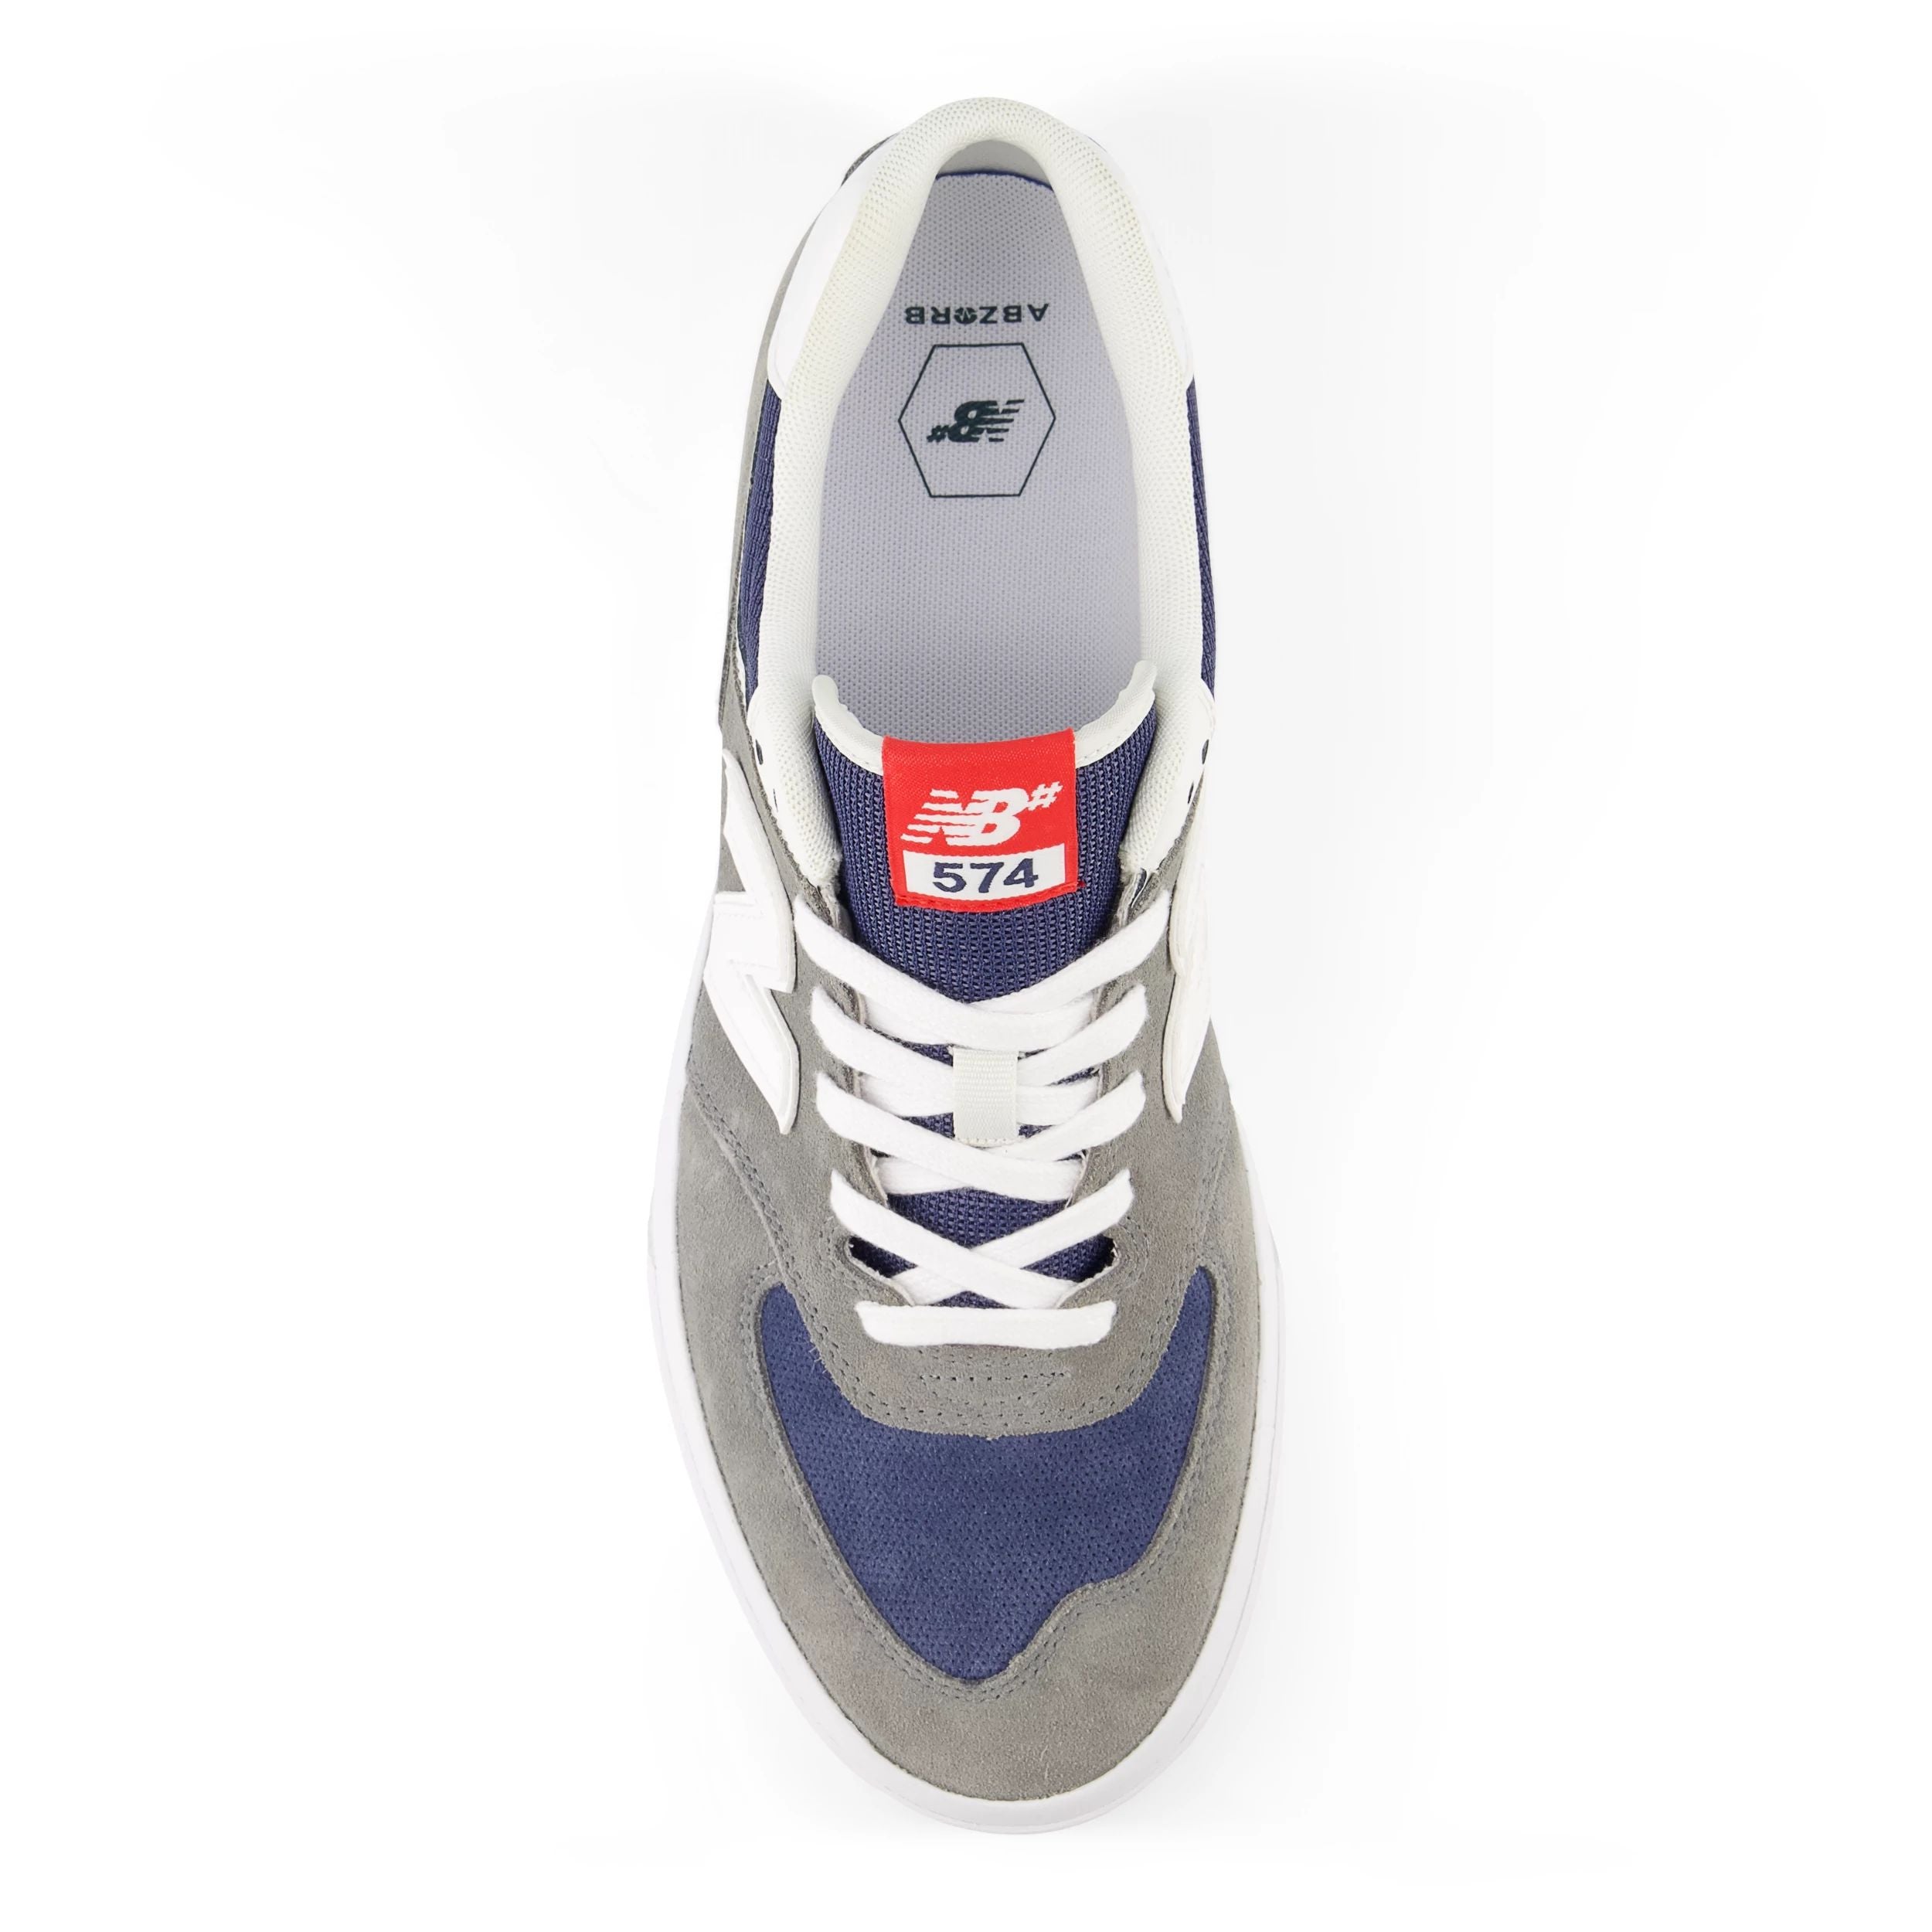 Grey/White NM574 Vulc NB Numeric Skate Shoe Top